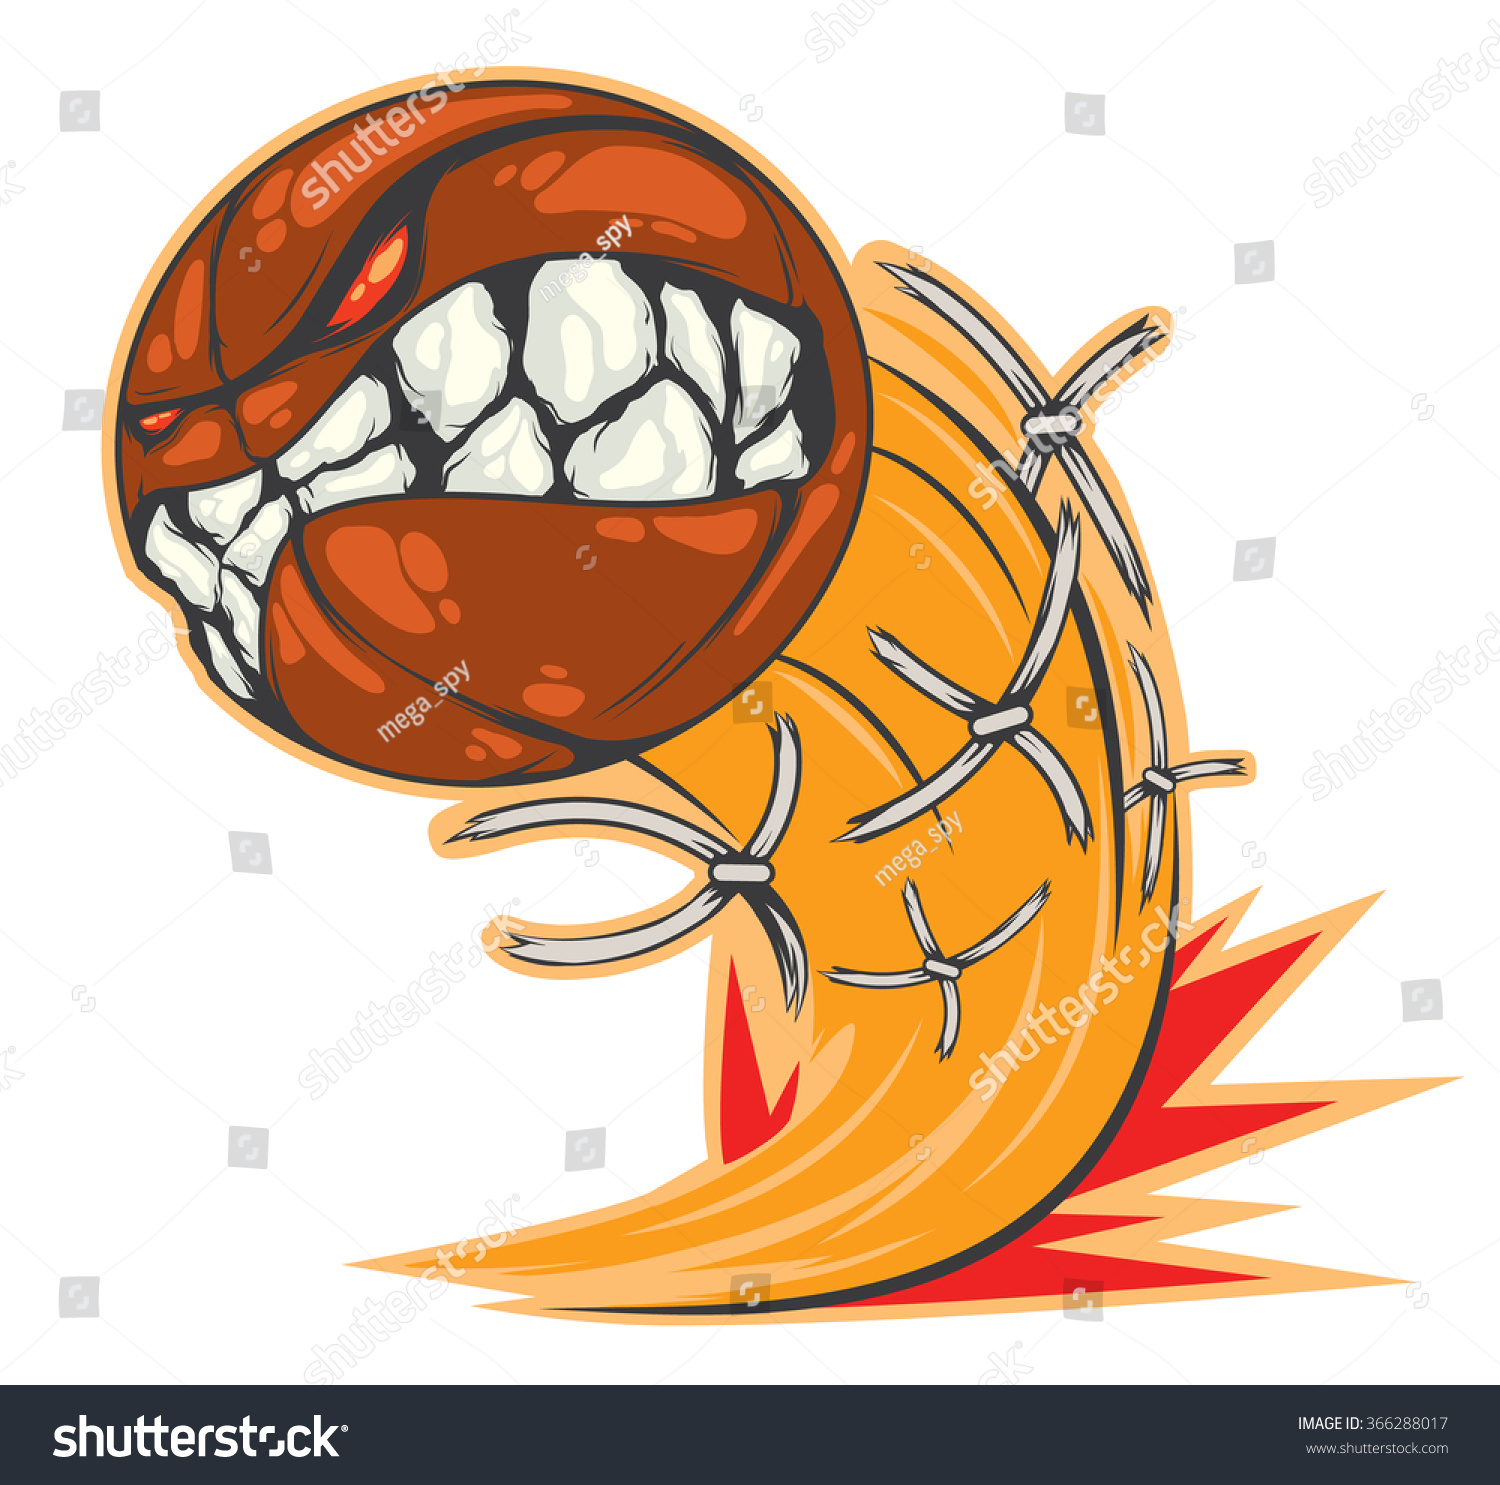 Мяч баскетбольный с зубами логотип